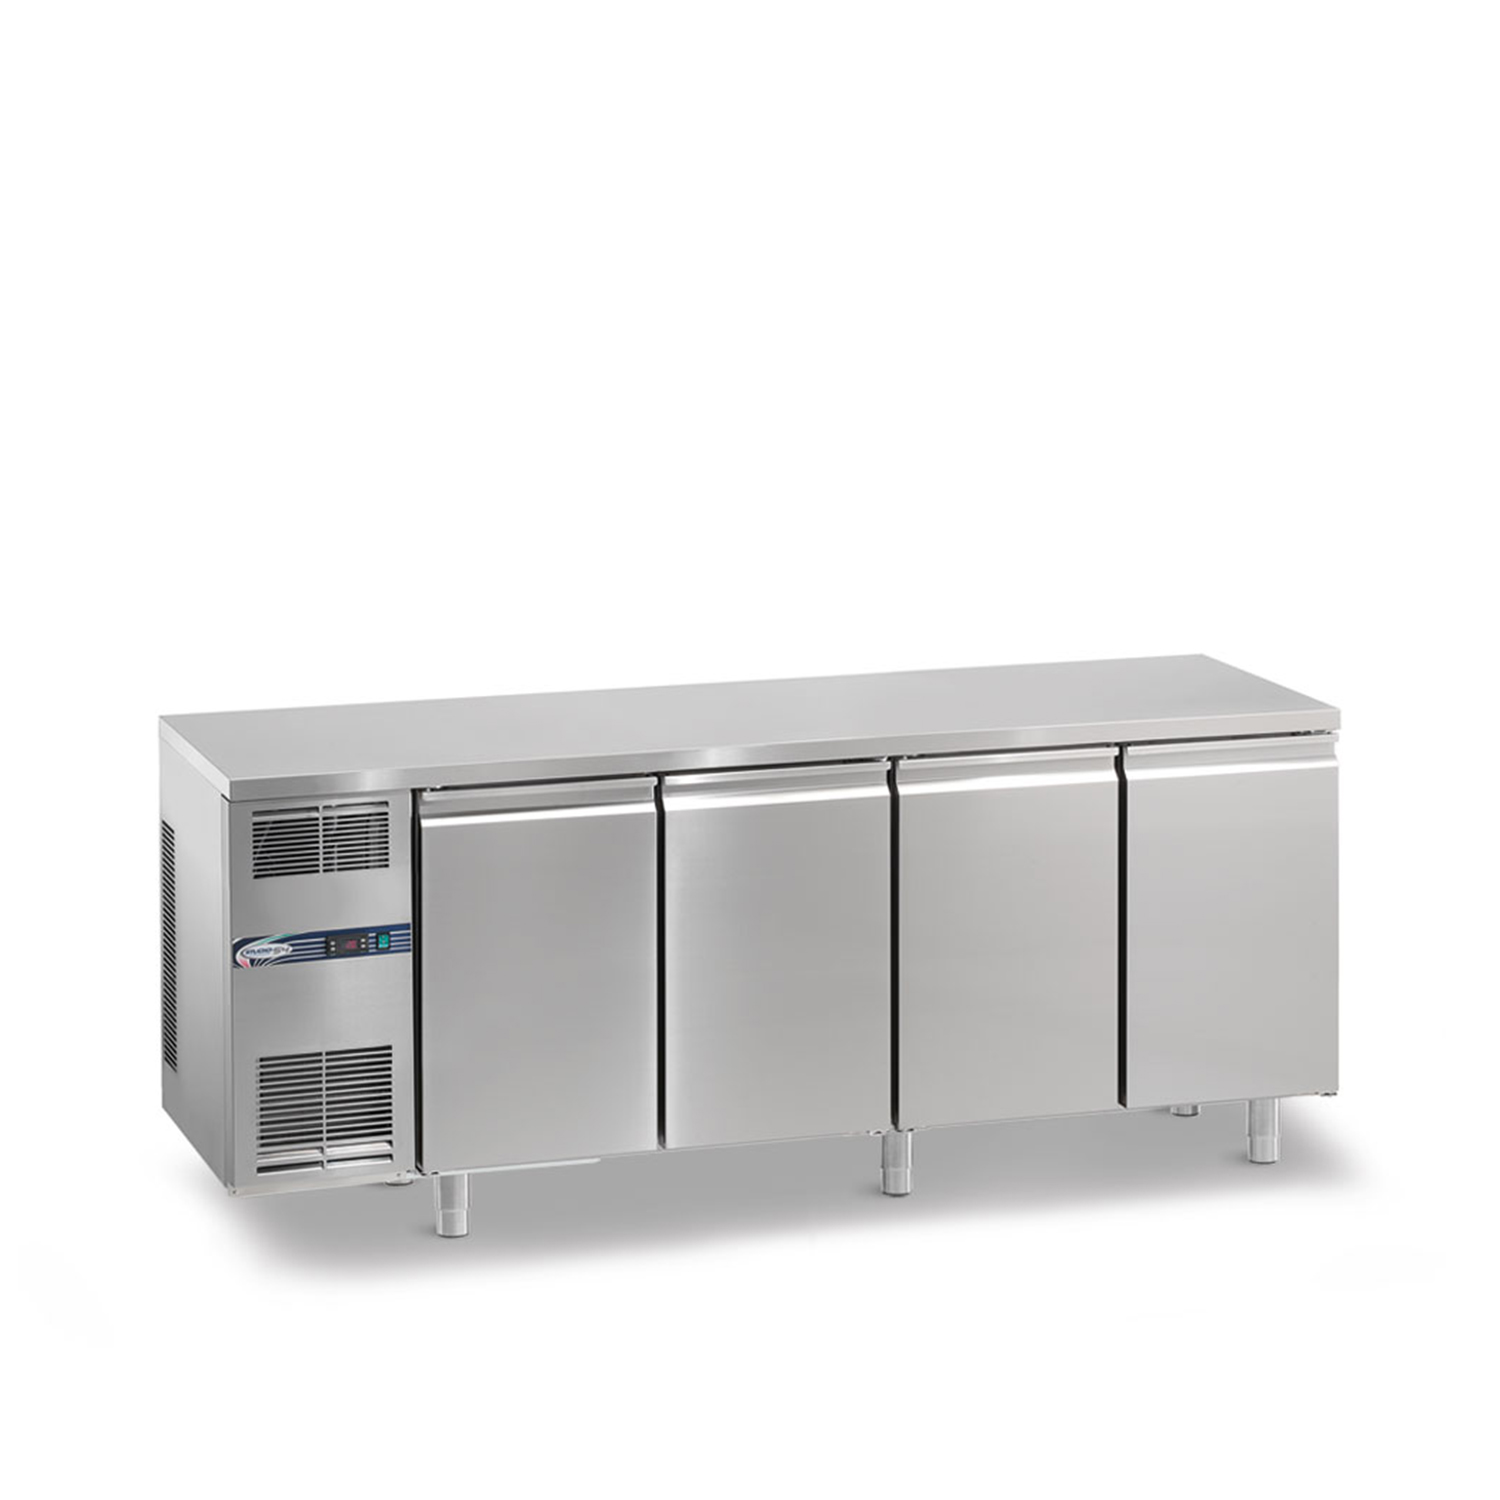 Tiefkühltisch DAIQUIRI Top Line H710 GN 1/1, B 2200  x T 700 x H 900 mm, 4 Kühlfächer, Arbeitsplatte